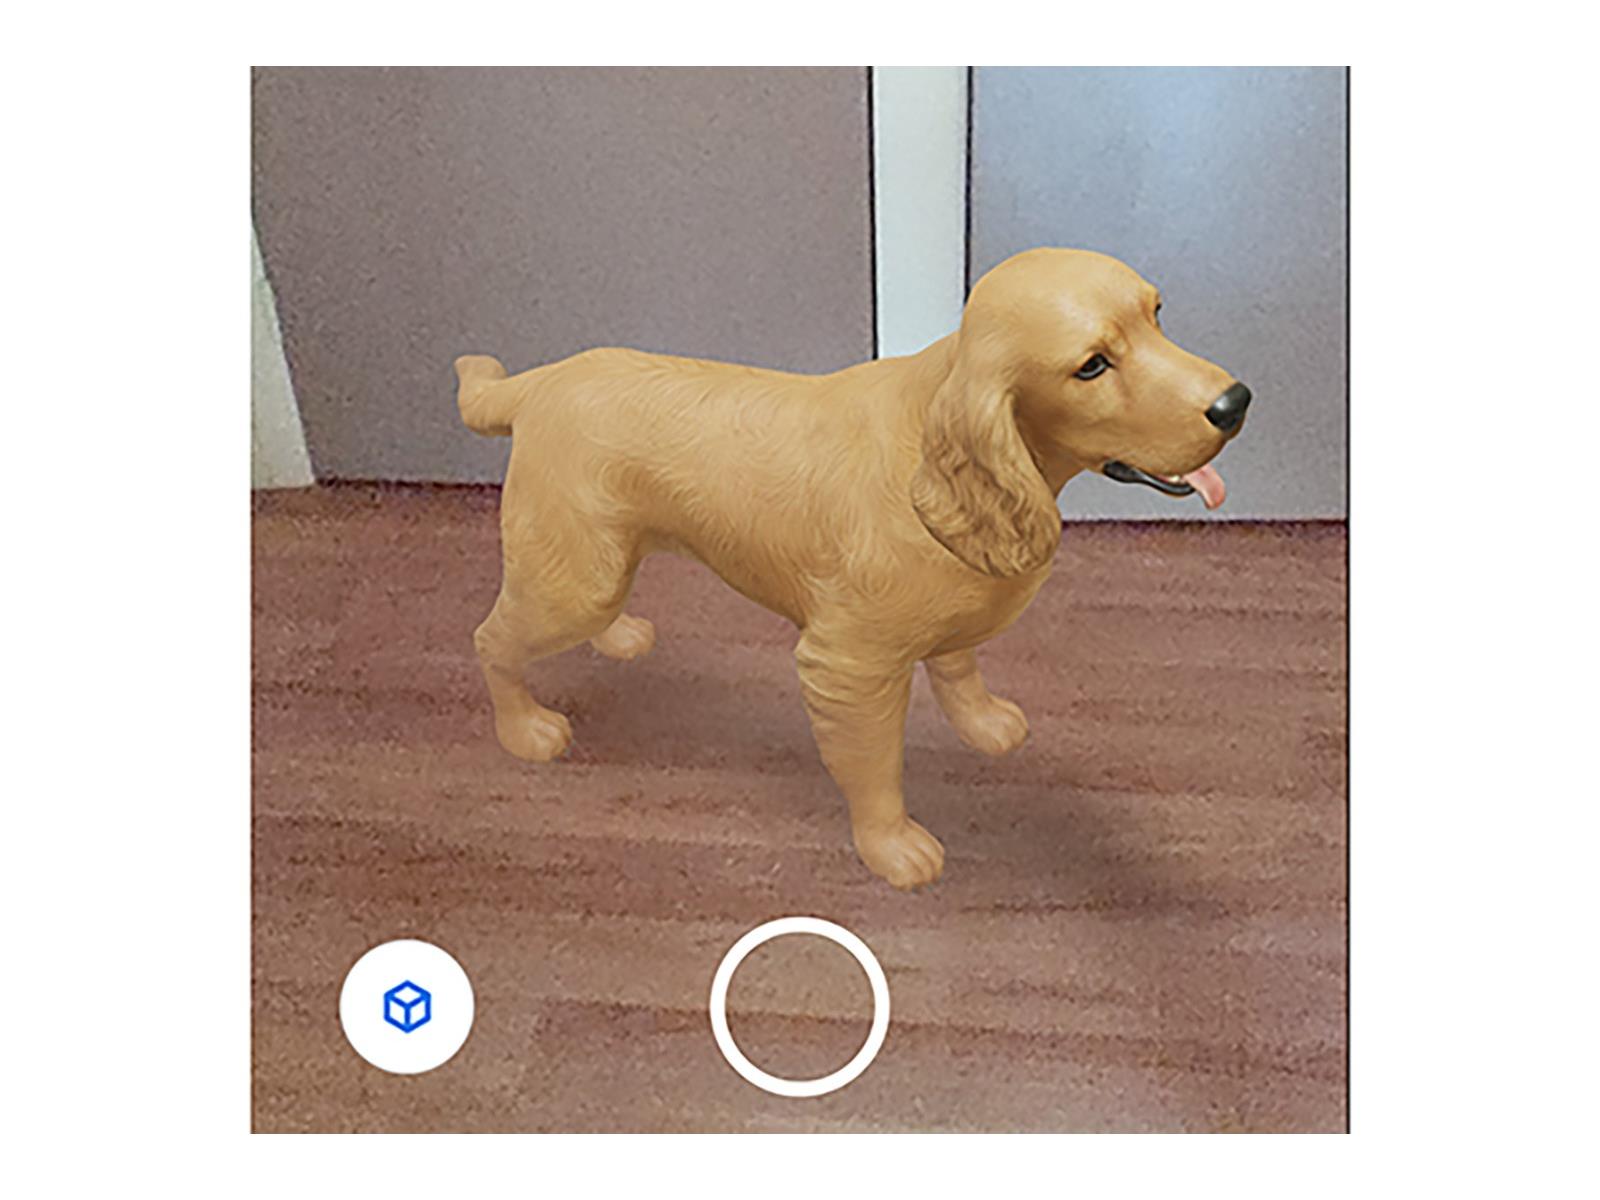 Google AR Animals